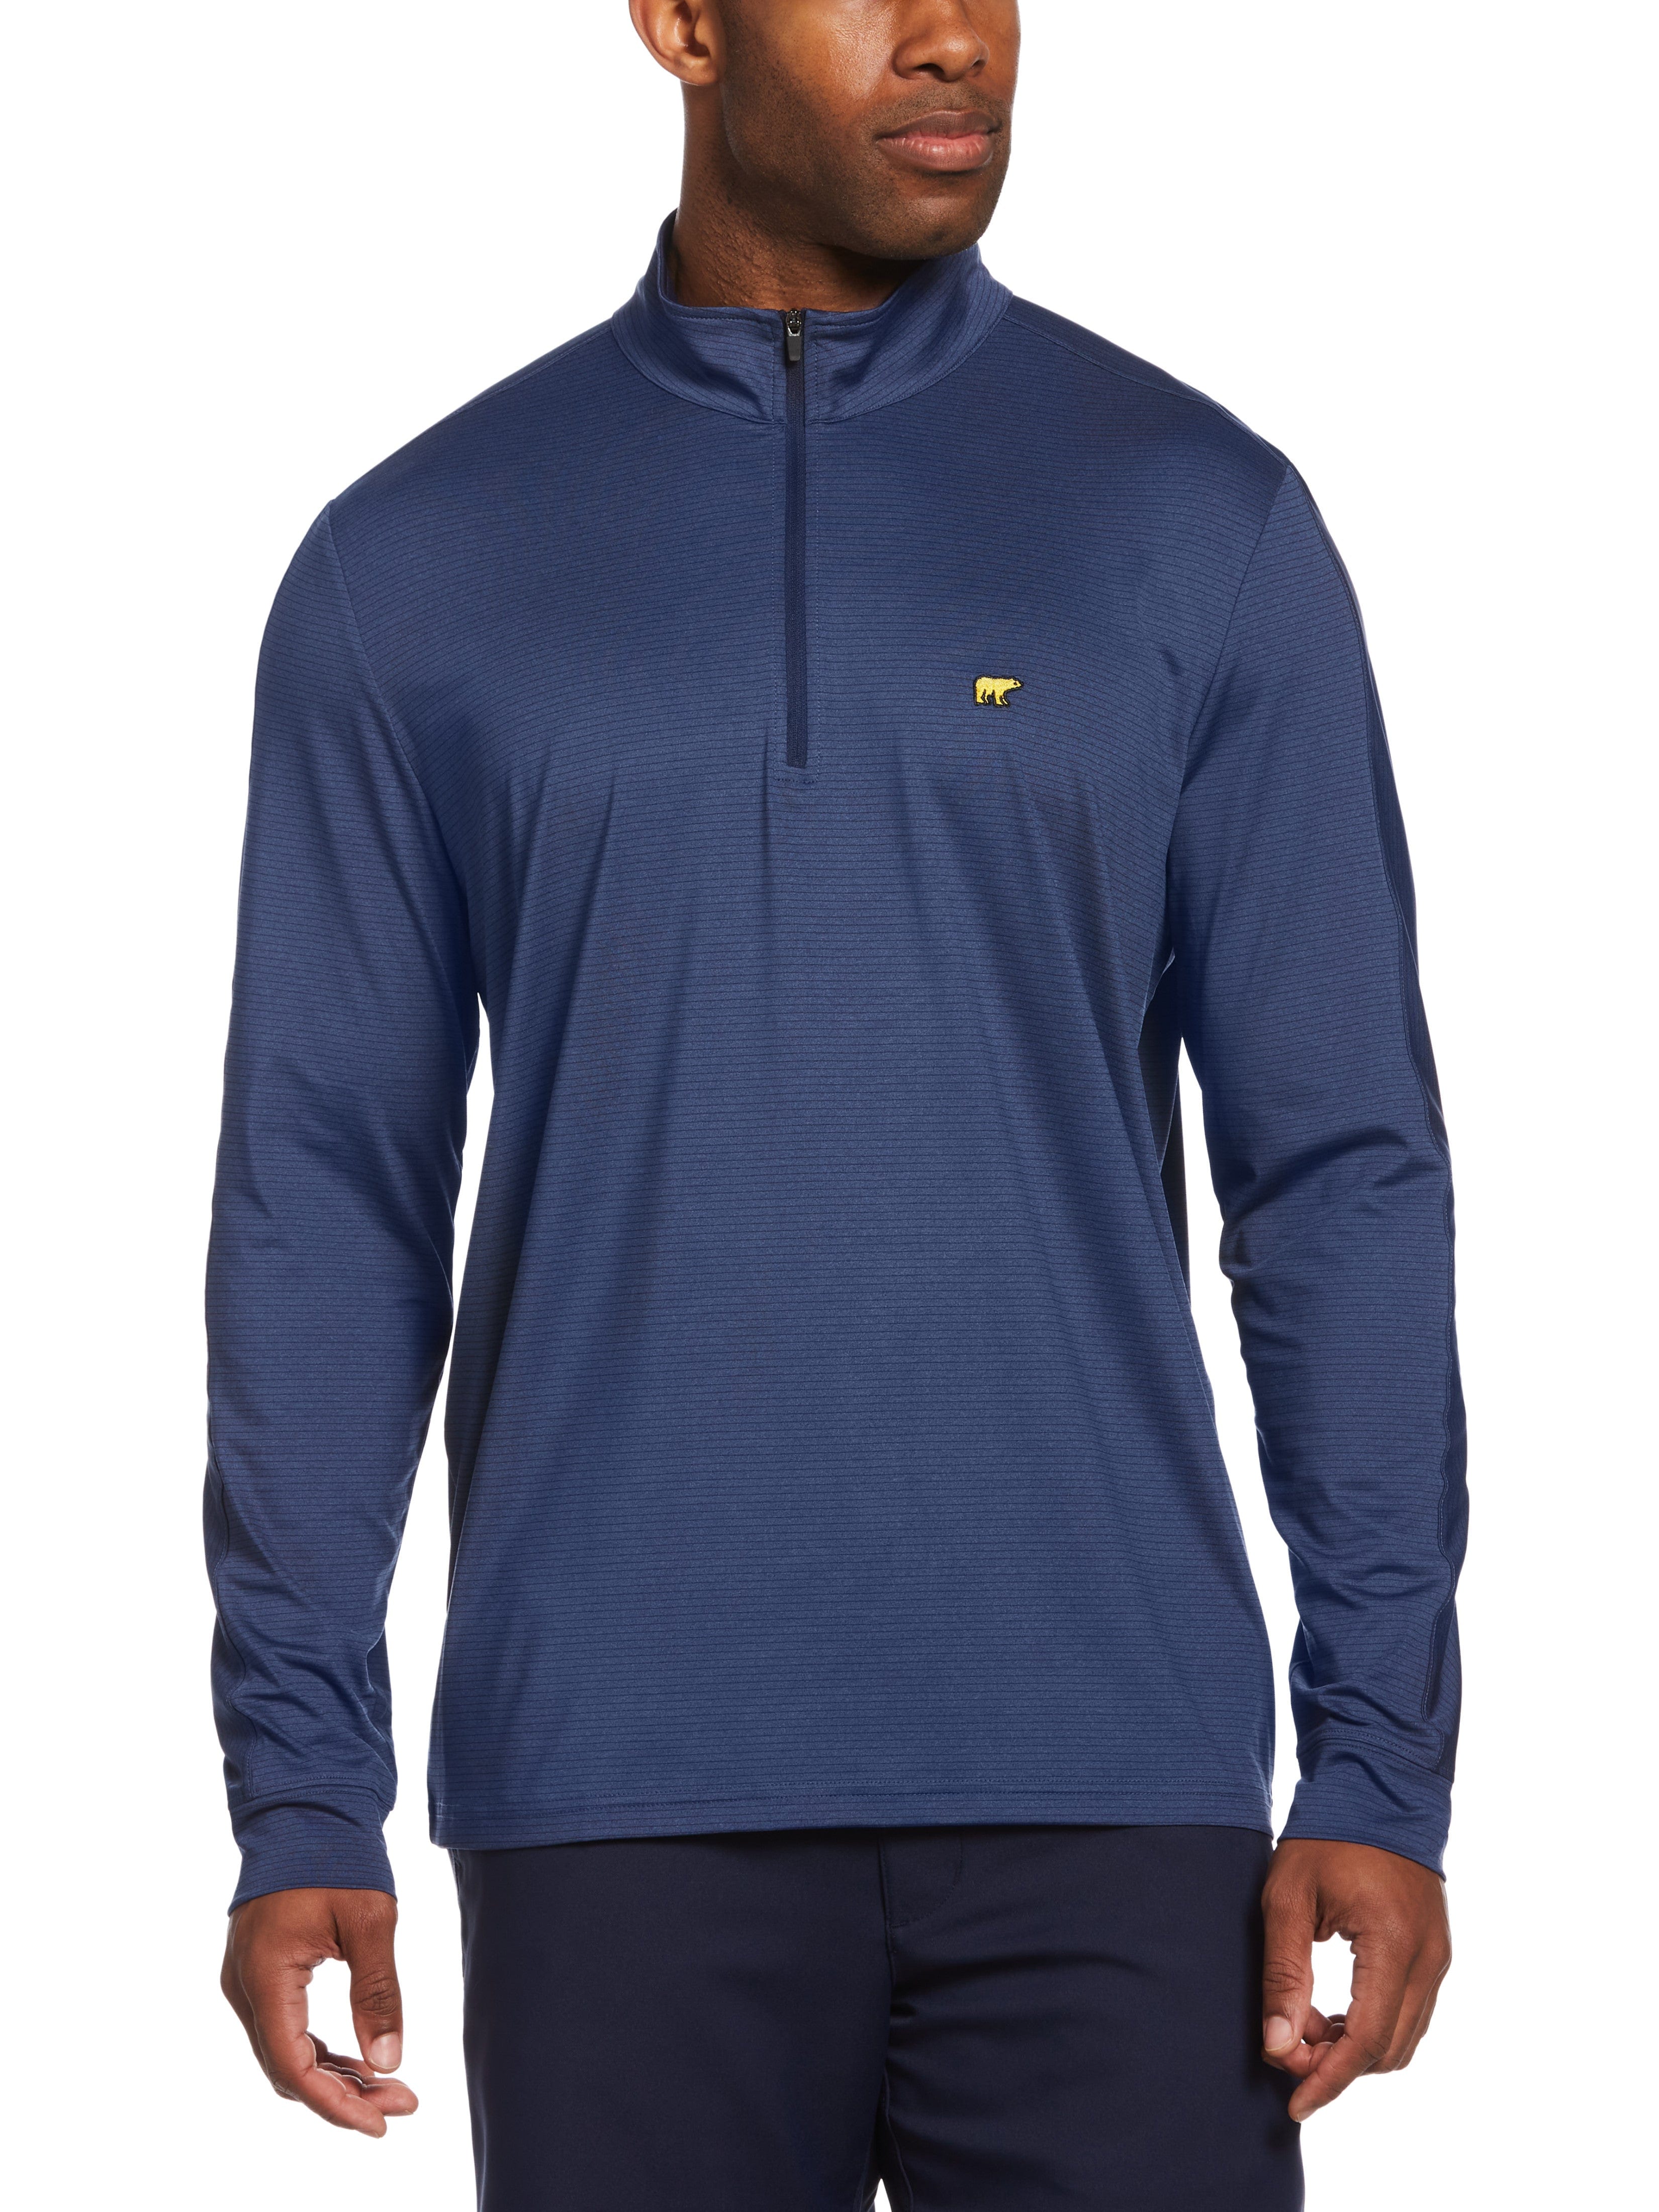 Jack Nicklaus Mens 1/4 Zip Sun Shade Base Layer Golf Shirt, Size XL, Peacoat Heather Brown, Polyester/Elastane | Golf Apparel Shop